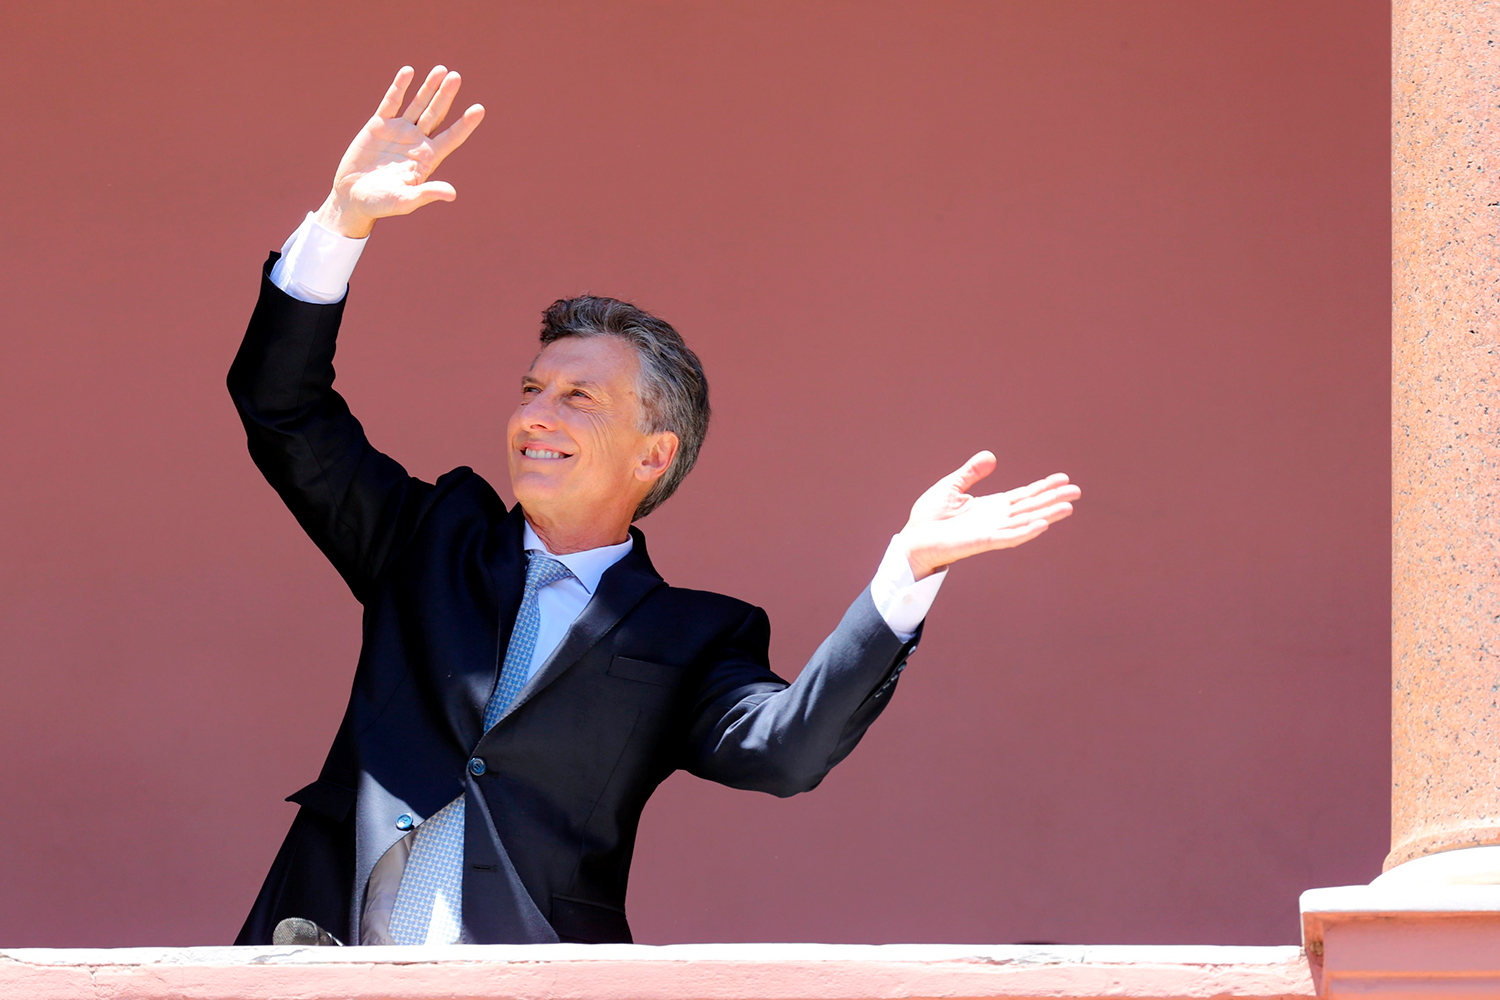 Un juez argentino declara “inconstitucional” el decreto de Macri